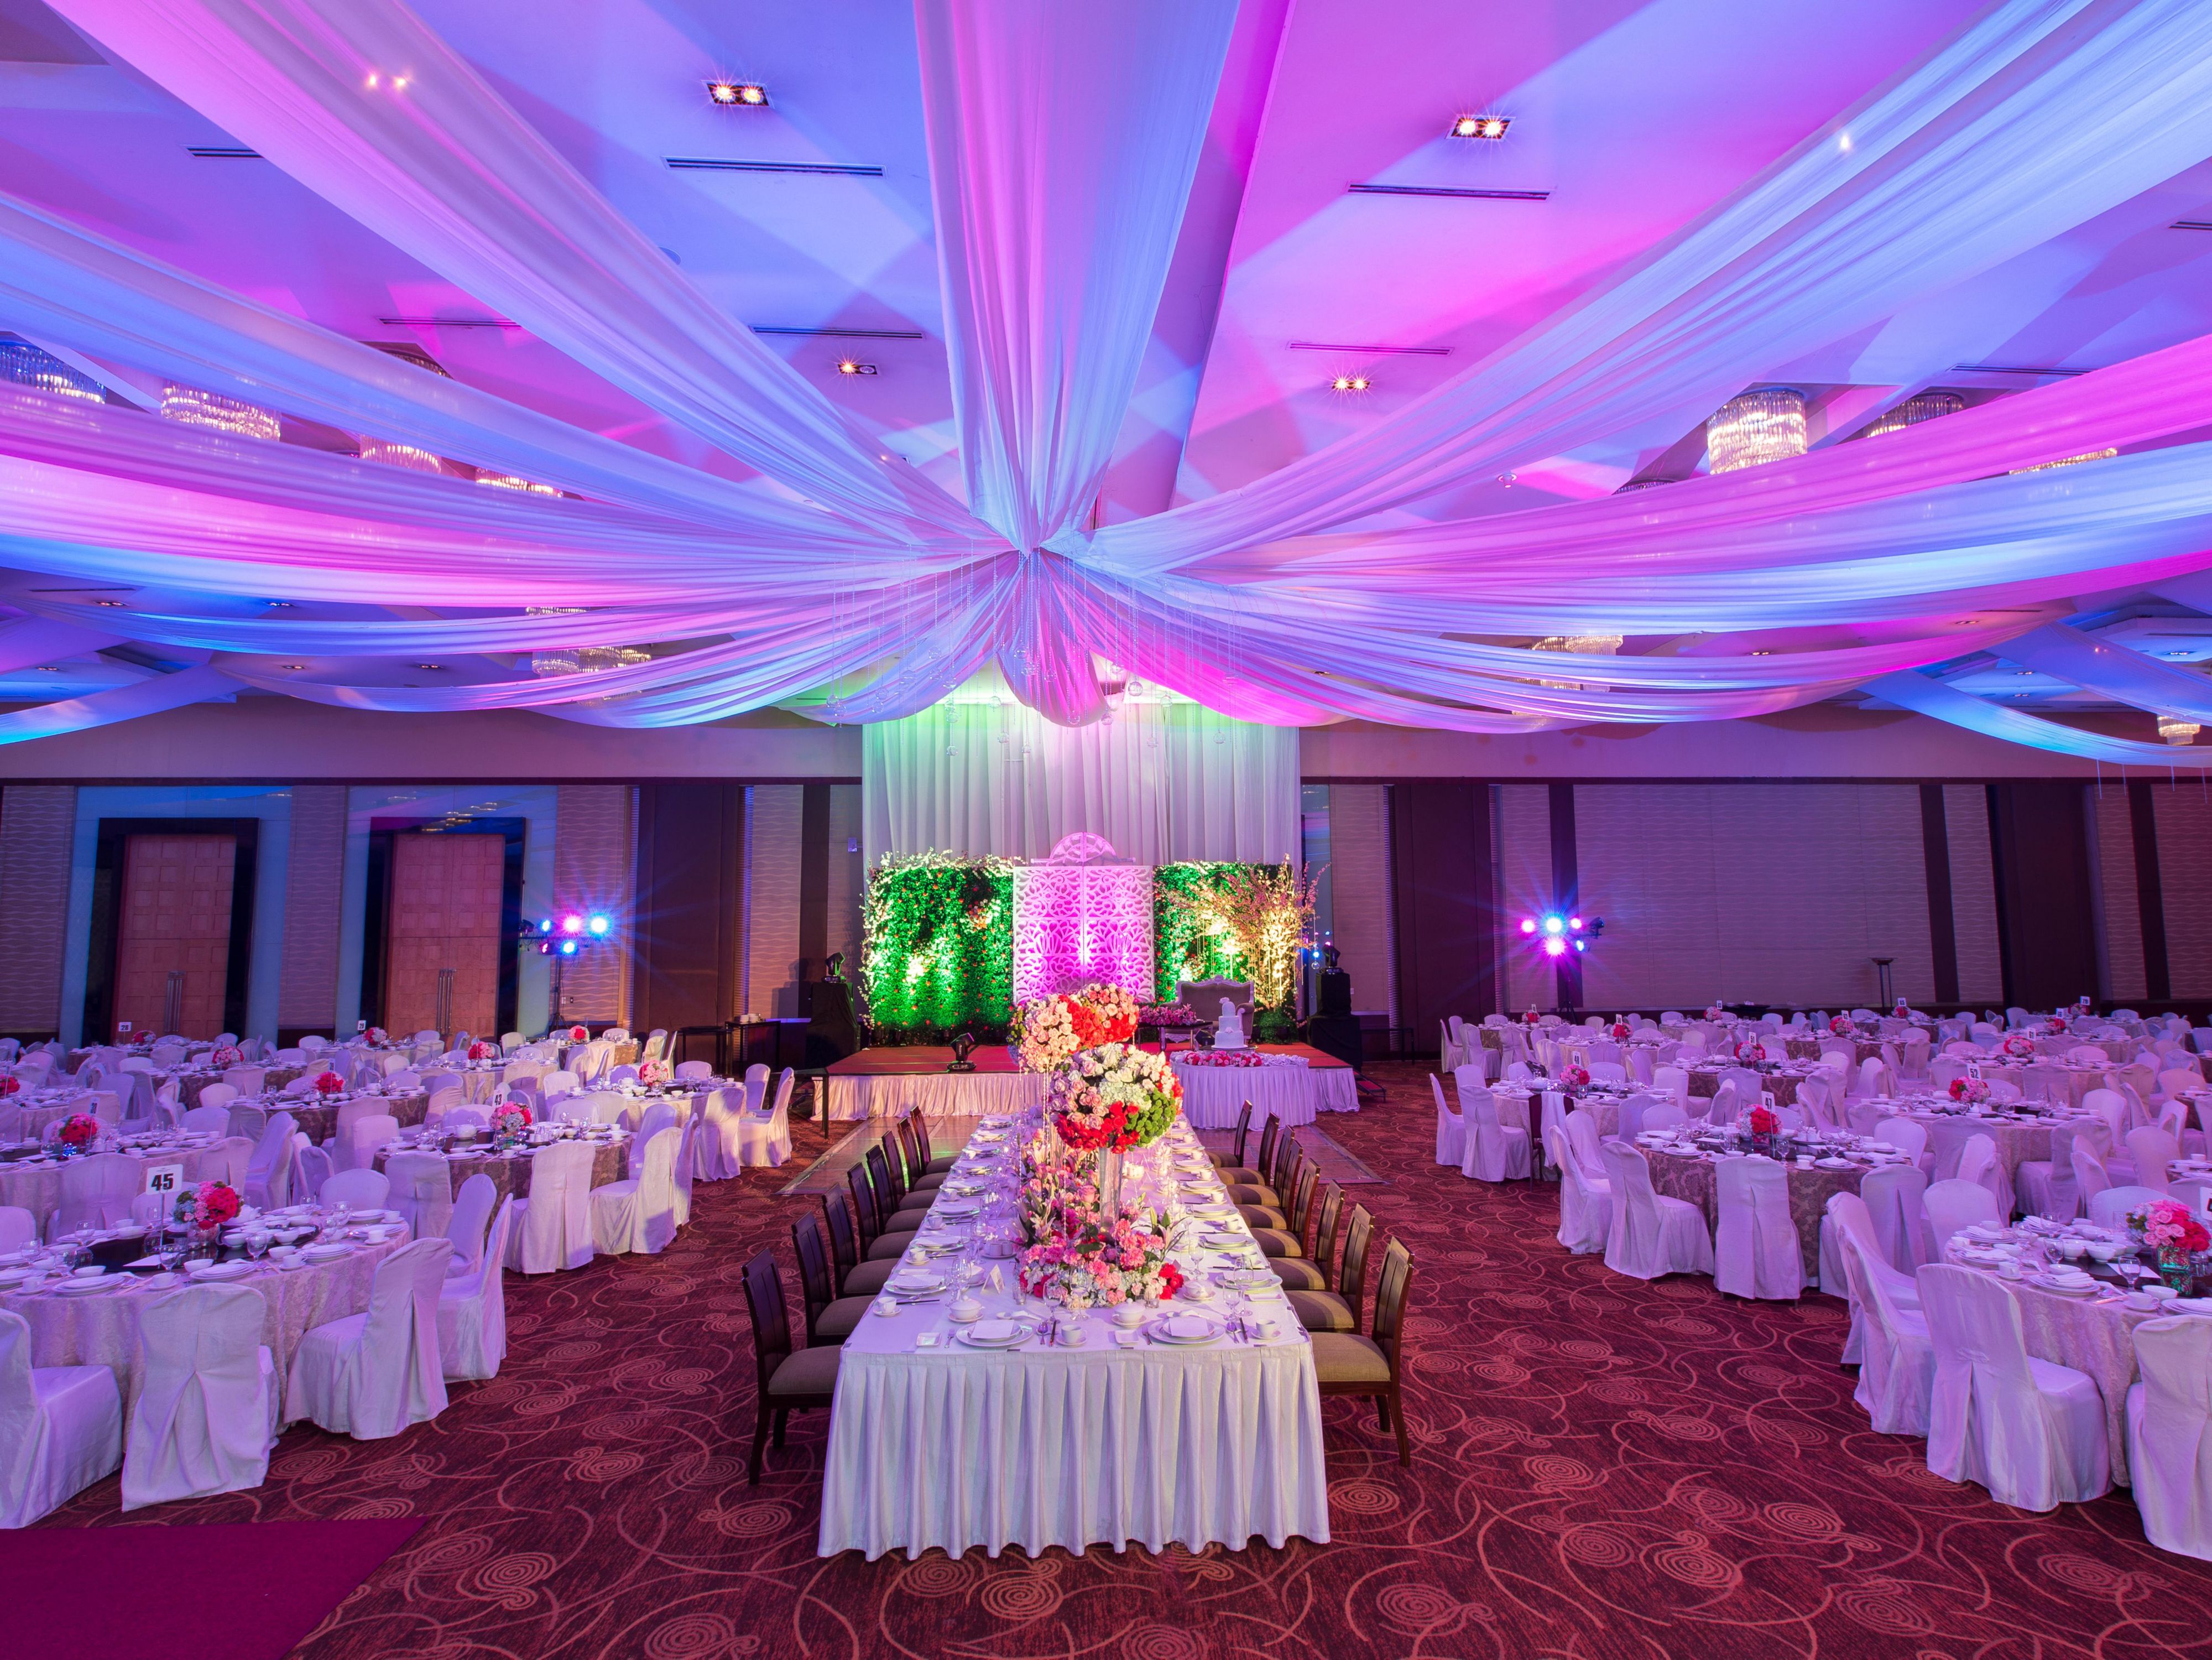 Attractive Wedding Halls-That Make Your Wedding Memorable